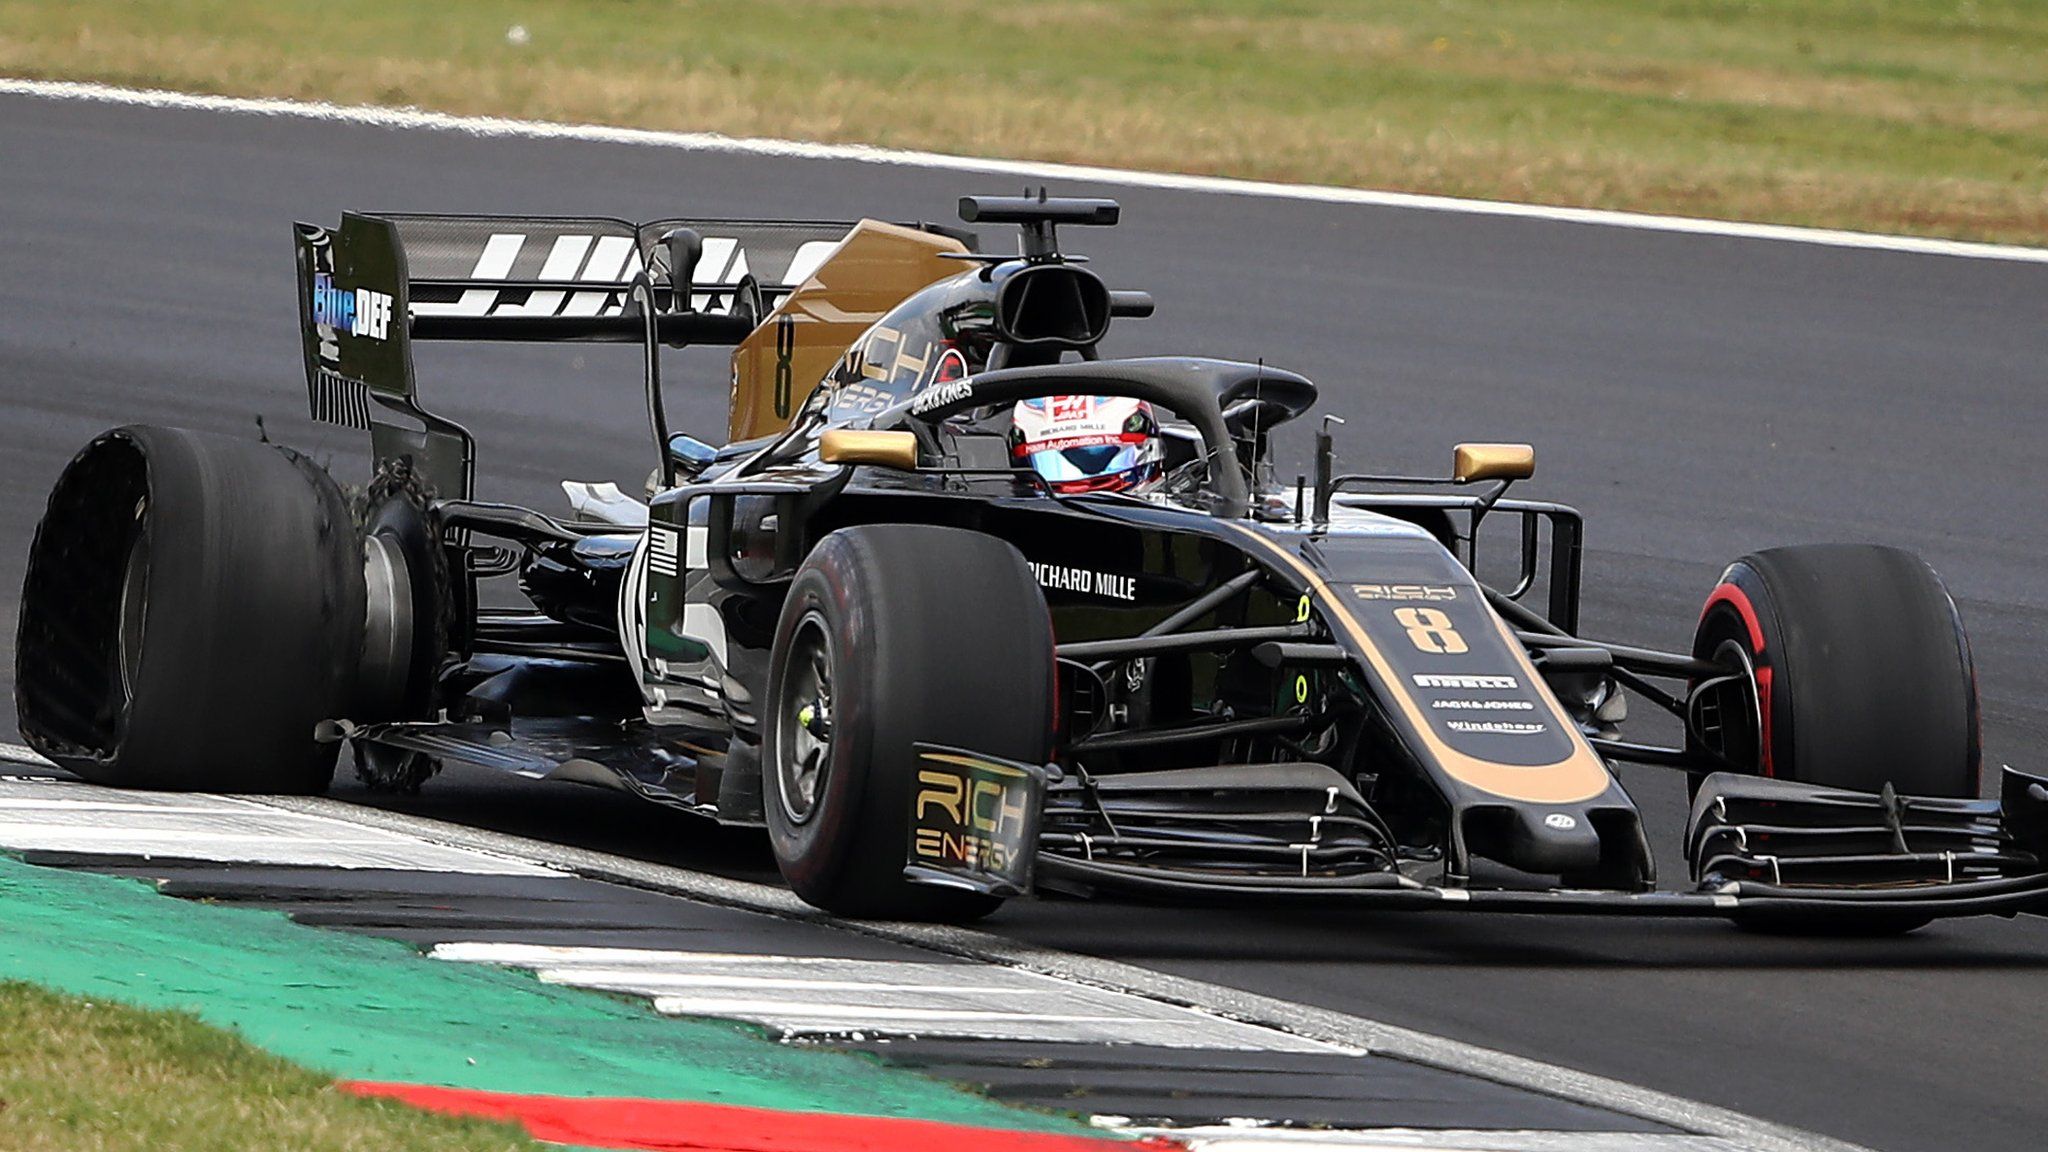 Haas driver Romain Grosjean driving during the British Grand Prix